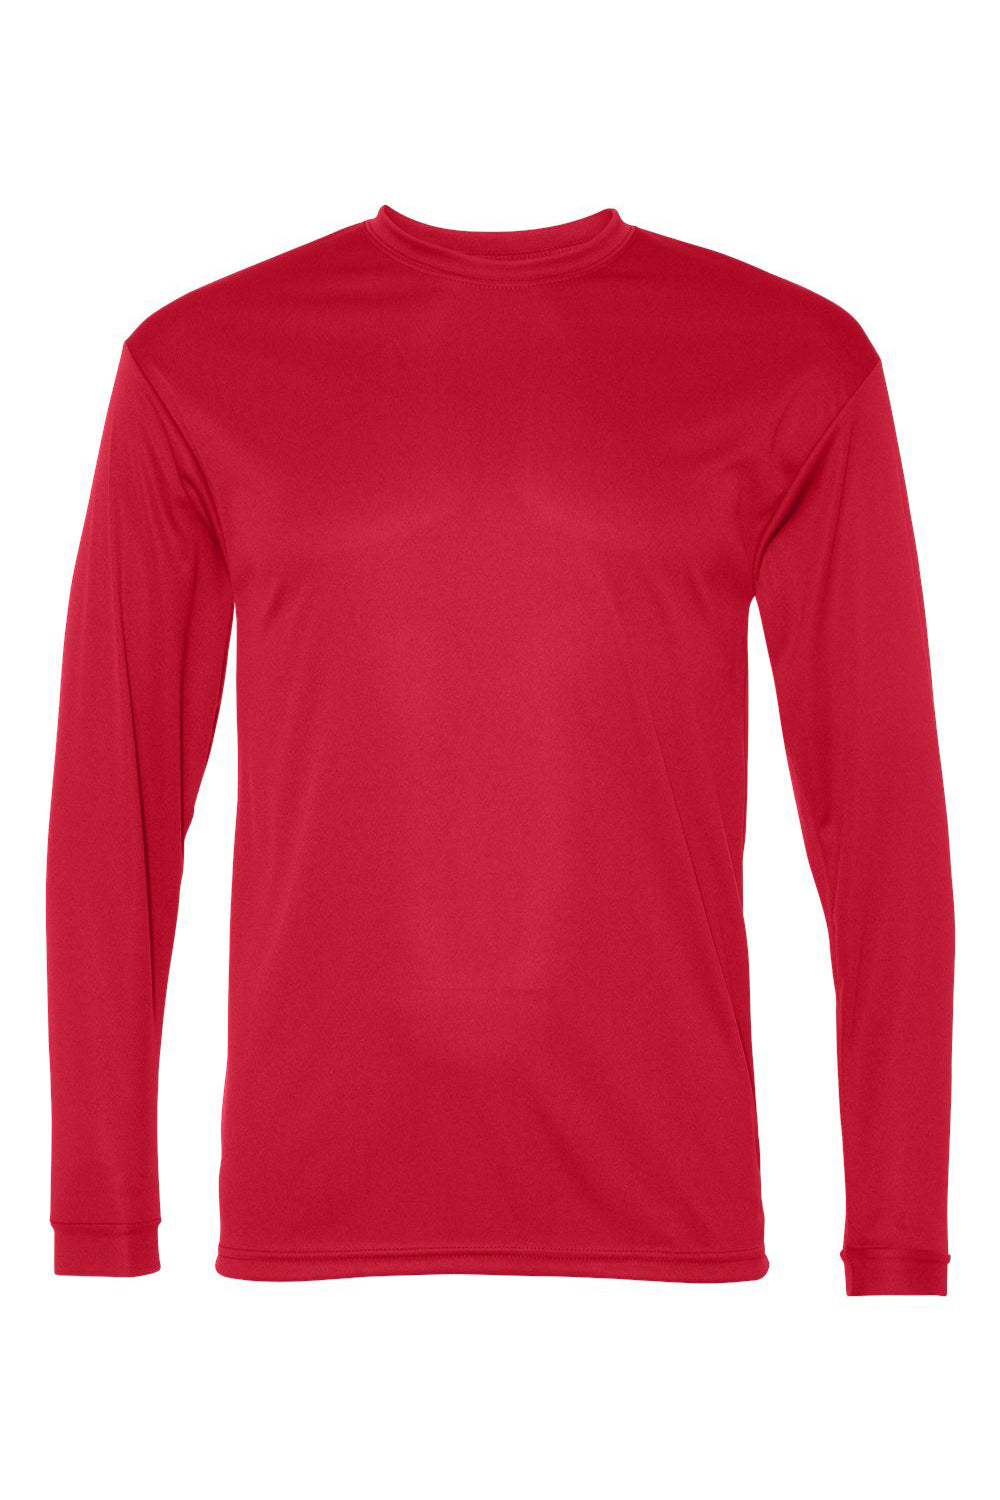 C2 Sport 5104 Mens Performance Moisture Wicking Long Sleeve Crewneck T-Shirt Red Flat Front